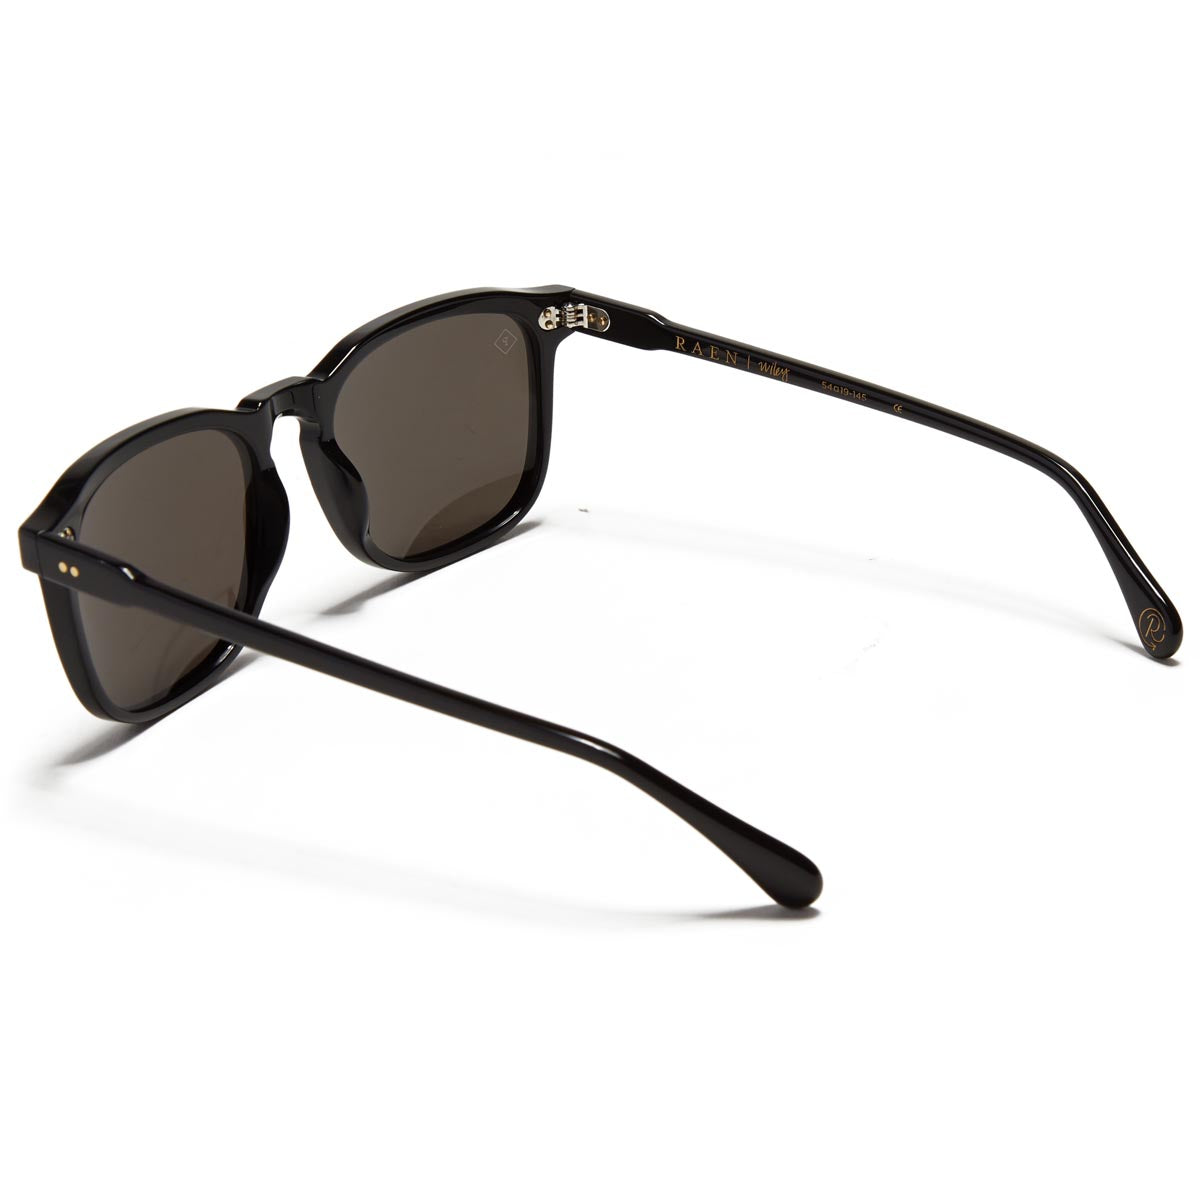 Raen Wiley 54 Sunglasses - Recycled Black/Smoke image 2